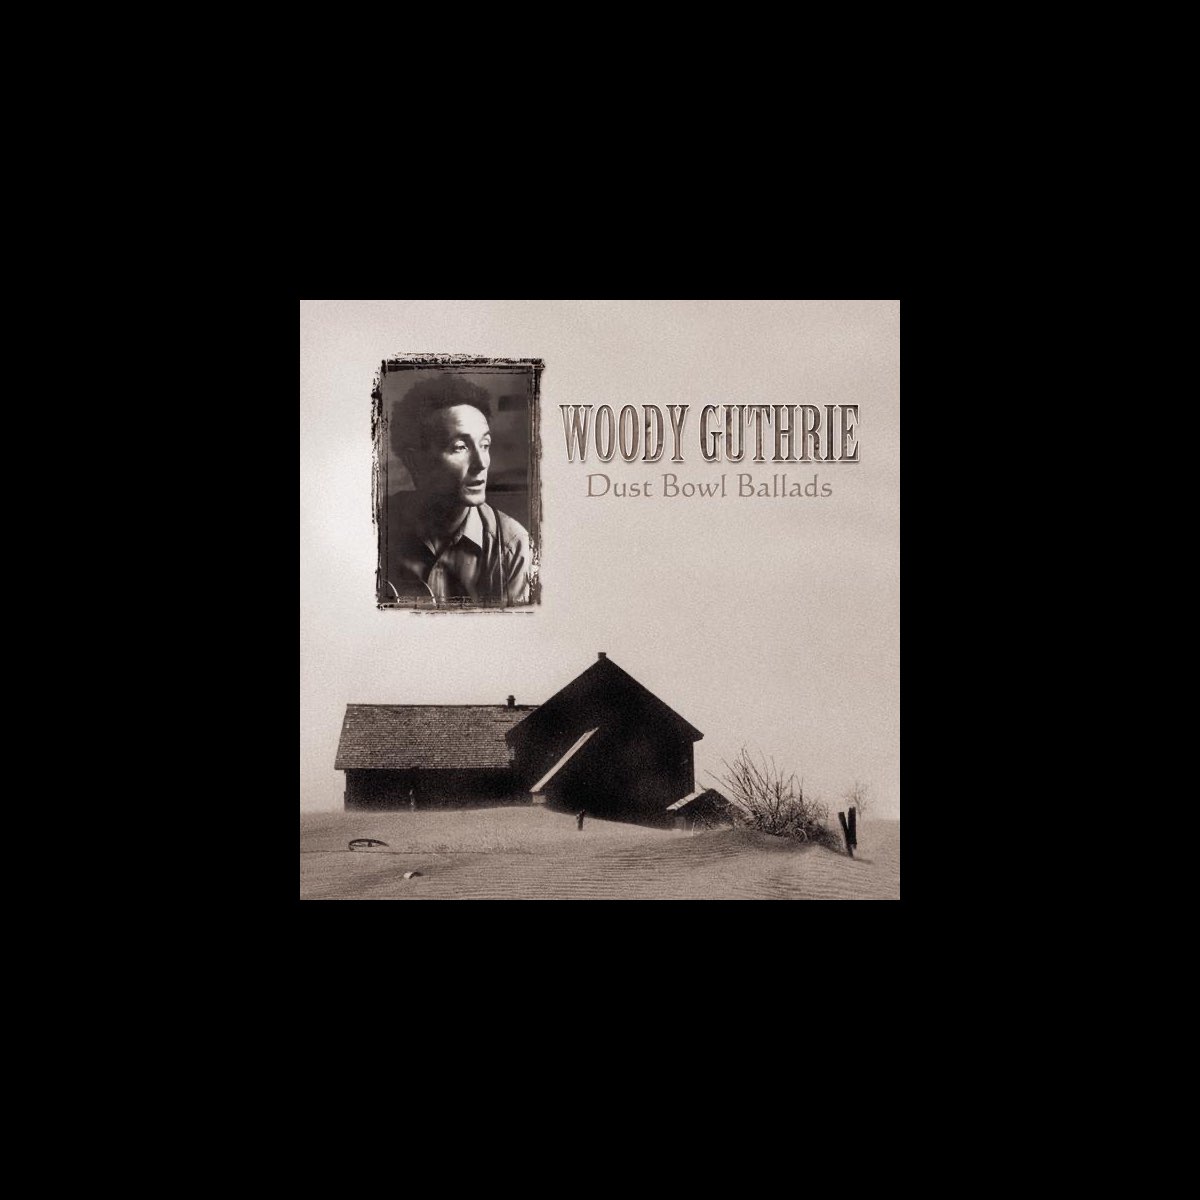 Dust Bowl Ballads - Album by Woody Guthrie - Apple Music